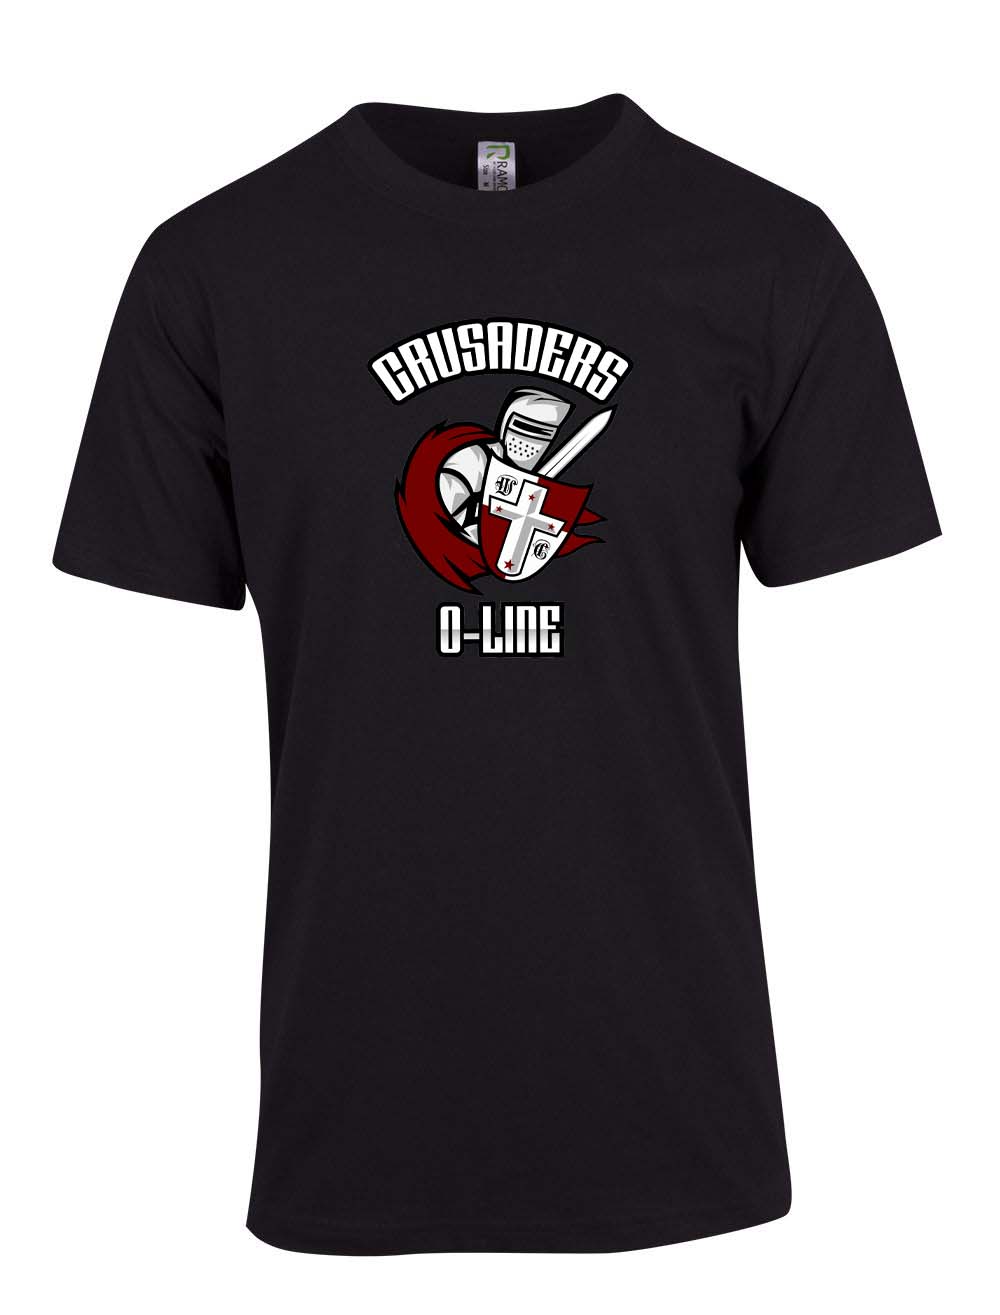 Crusaders Oline Logo T-Shirt